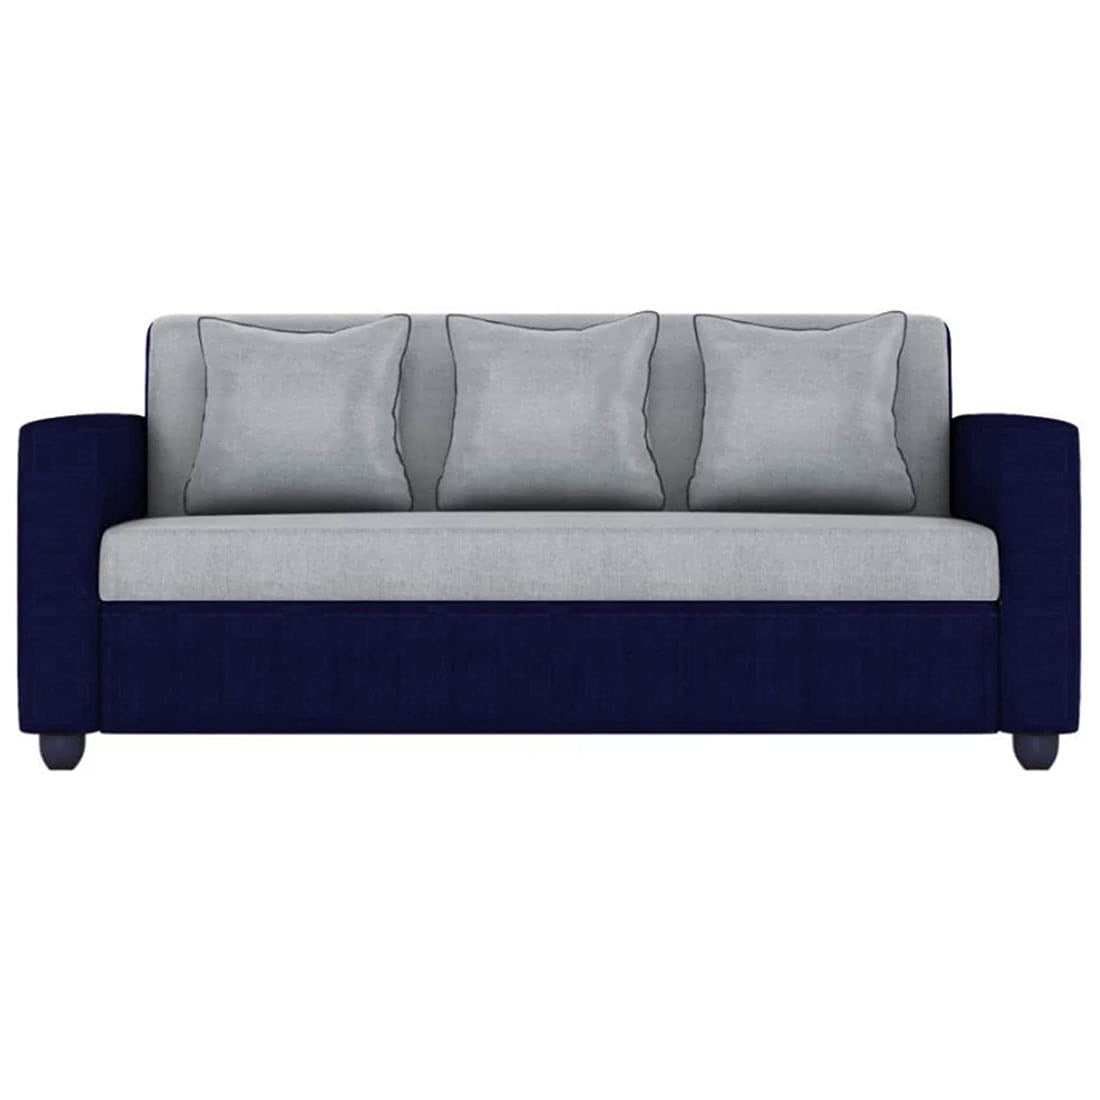 5 Seater Sofa Set: 3+1+1 Fabric Sofa Set (Light Grey-Dark Blue)